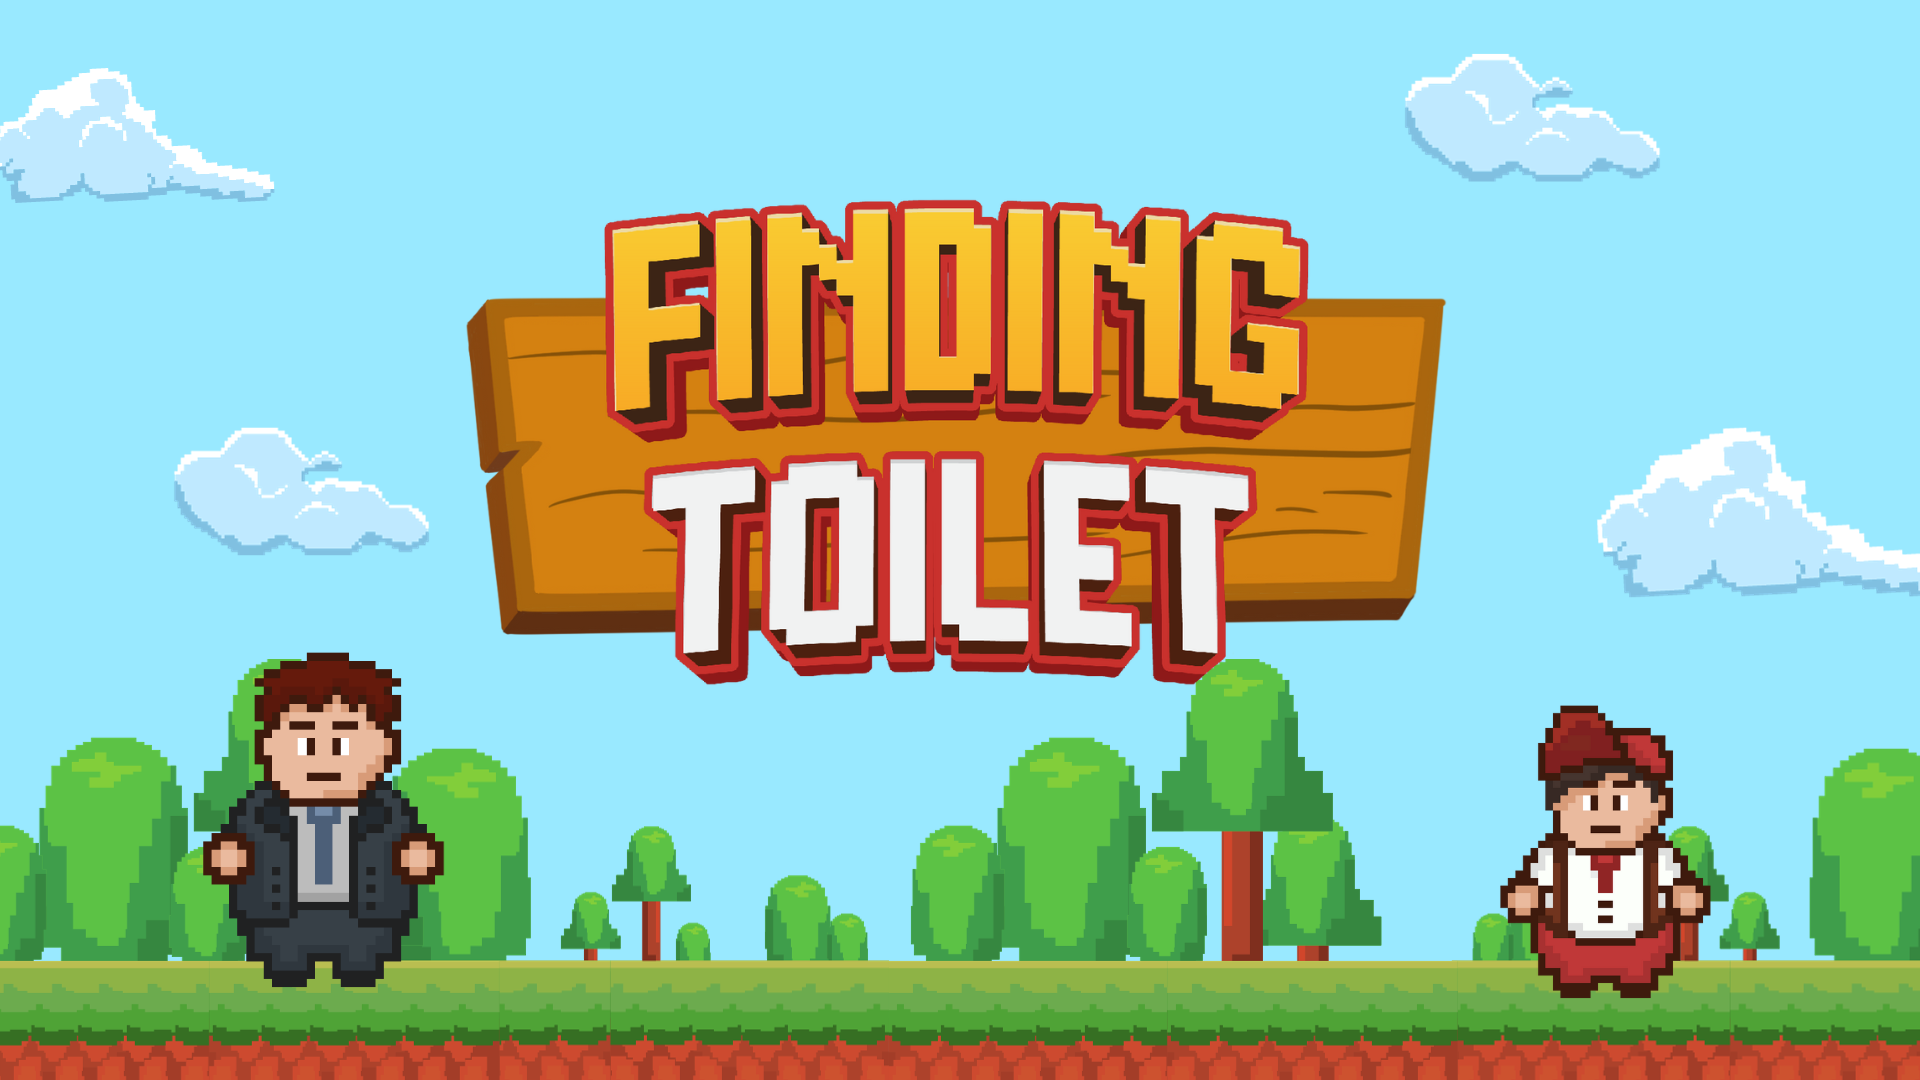 Finding Toilet